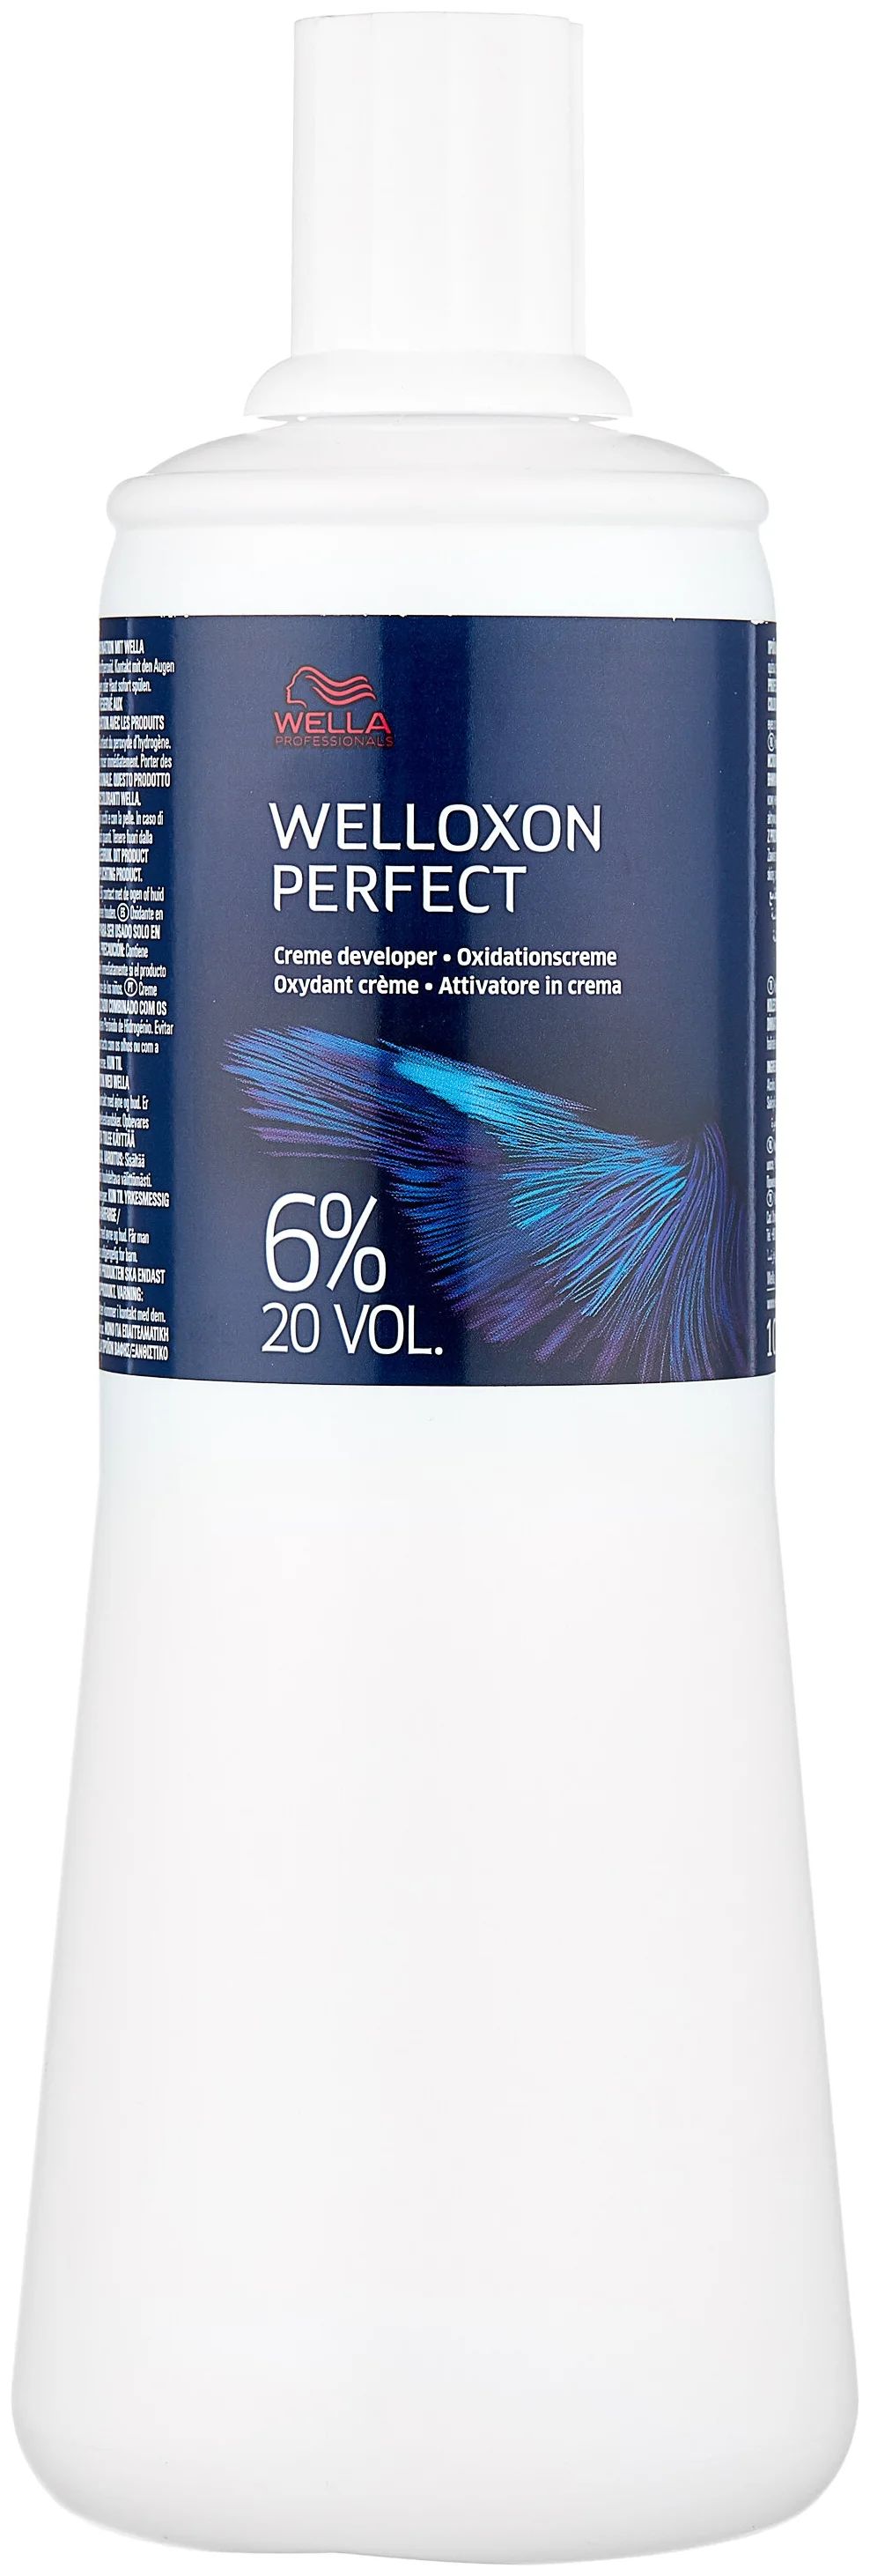 Краска для волос Wella Welloxon Koleston Perfect 6% крем-проявитель, 1 л крем окислитель проявитель 4 5 % oxycream 15 vol pncottc0275 250 мл